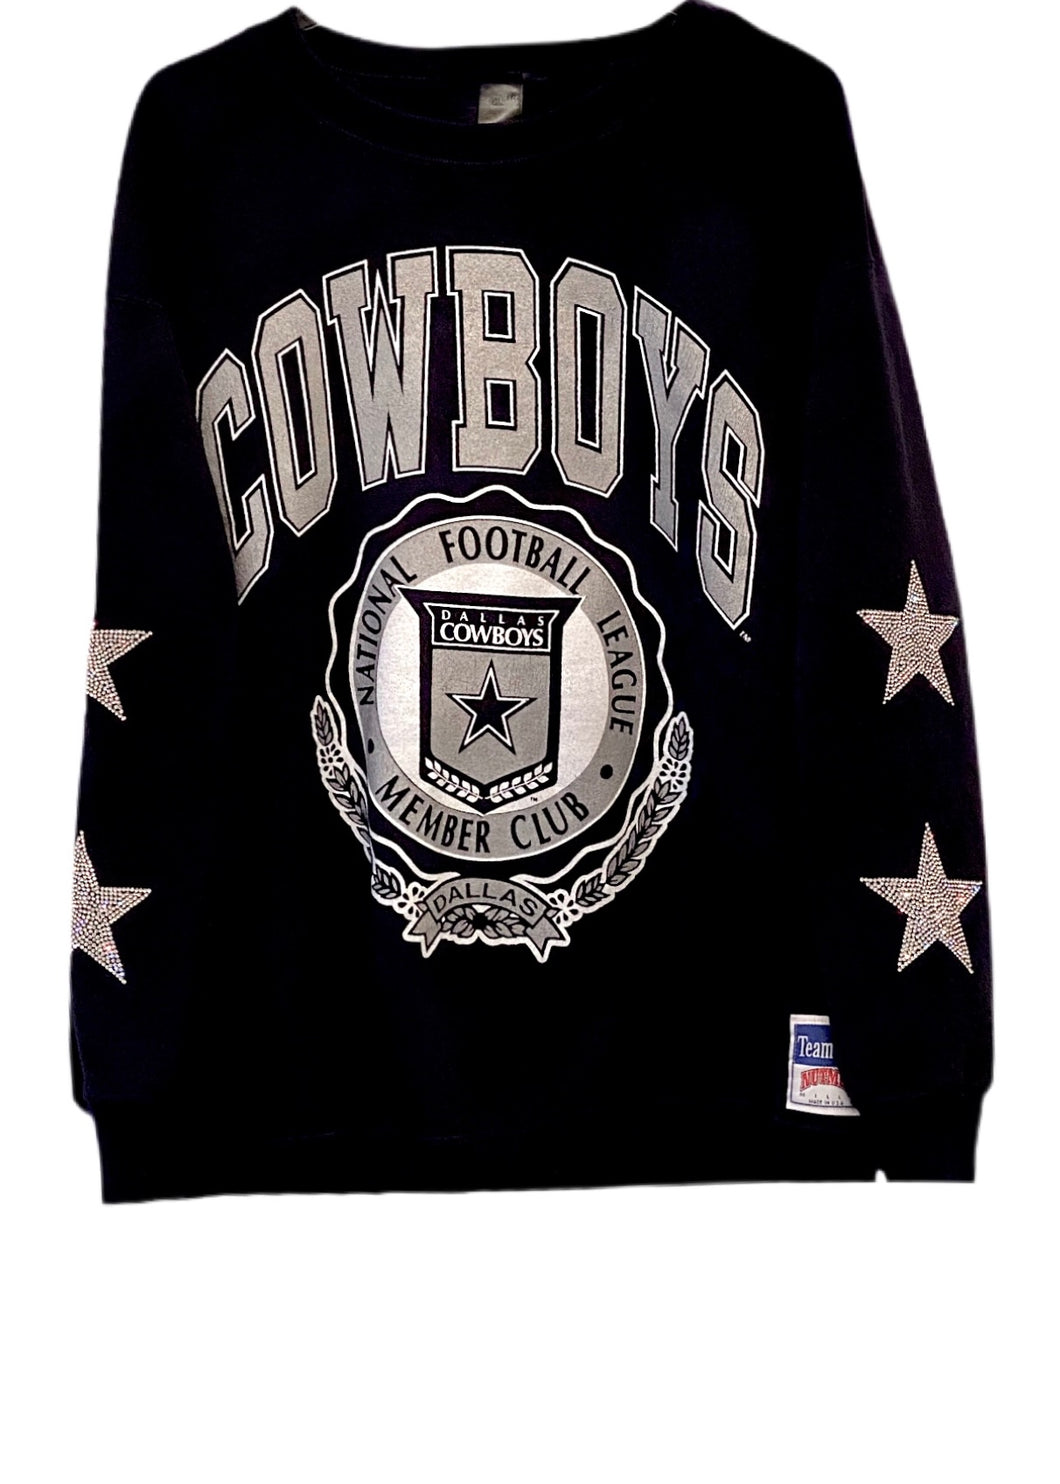 Dallas Cowboys, NFL One of a KIND Vintage Swear shirt with Crystal Star Design